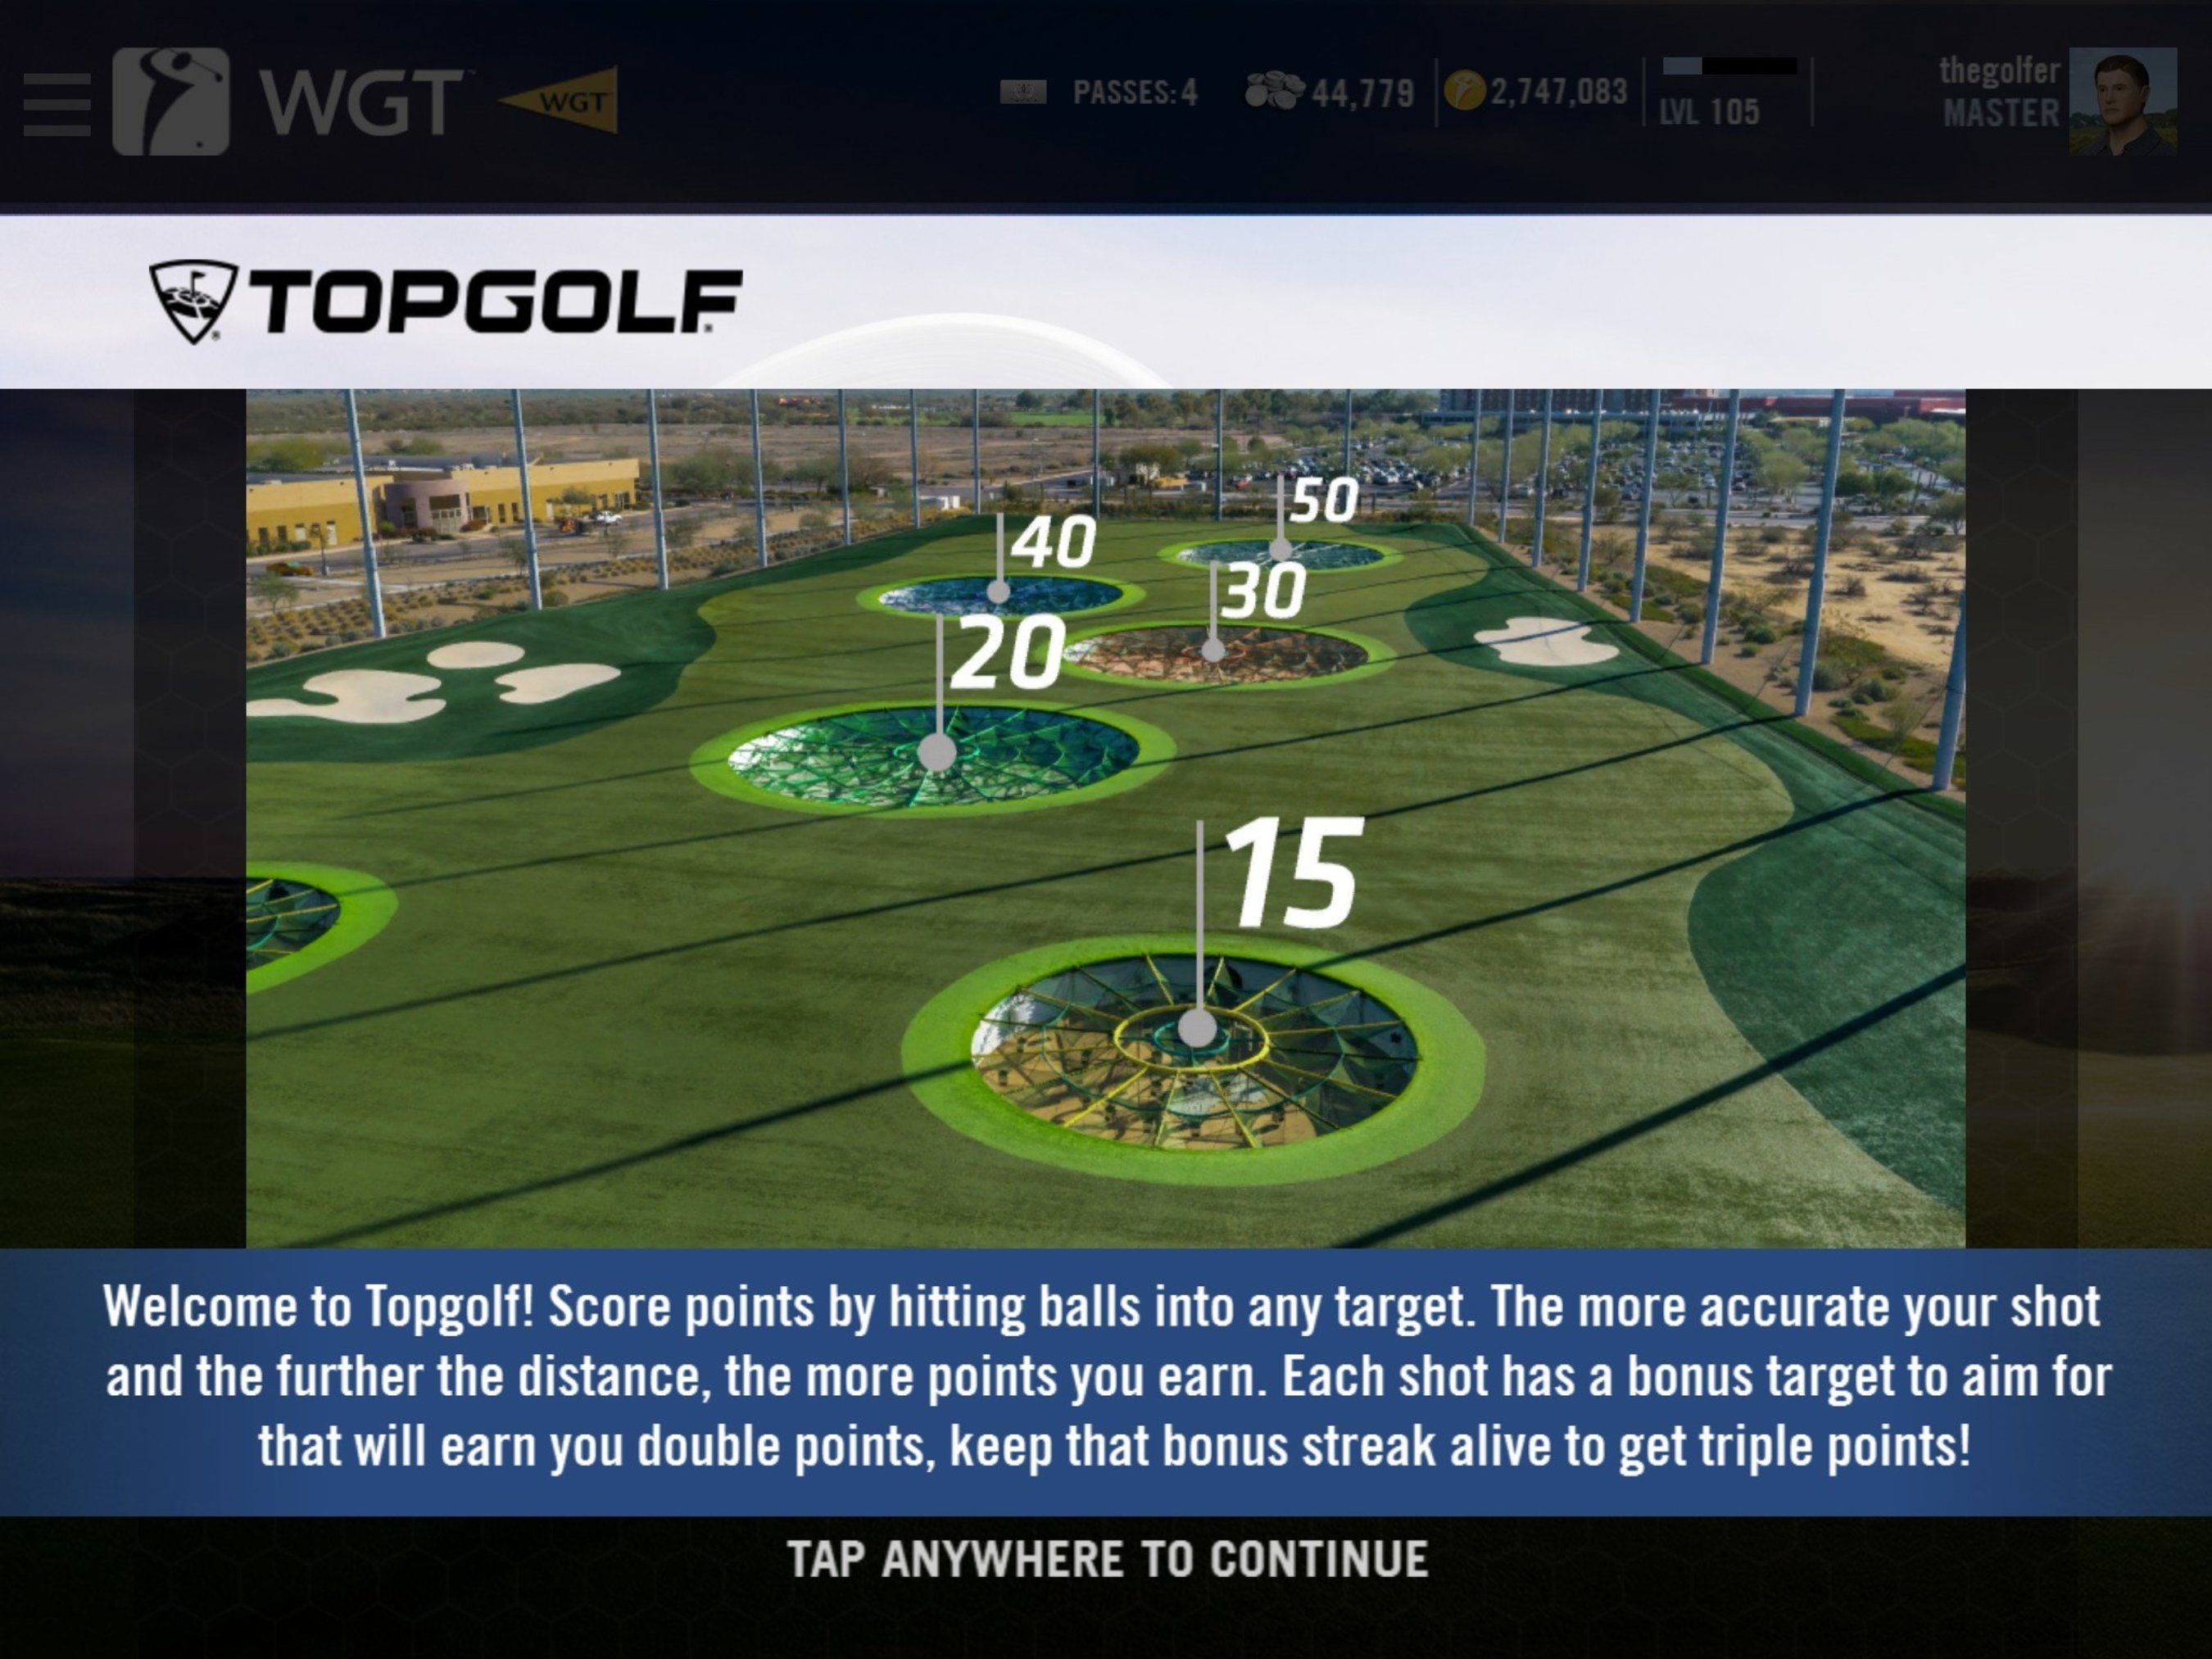 Topgolf game in WGT Golf app